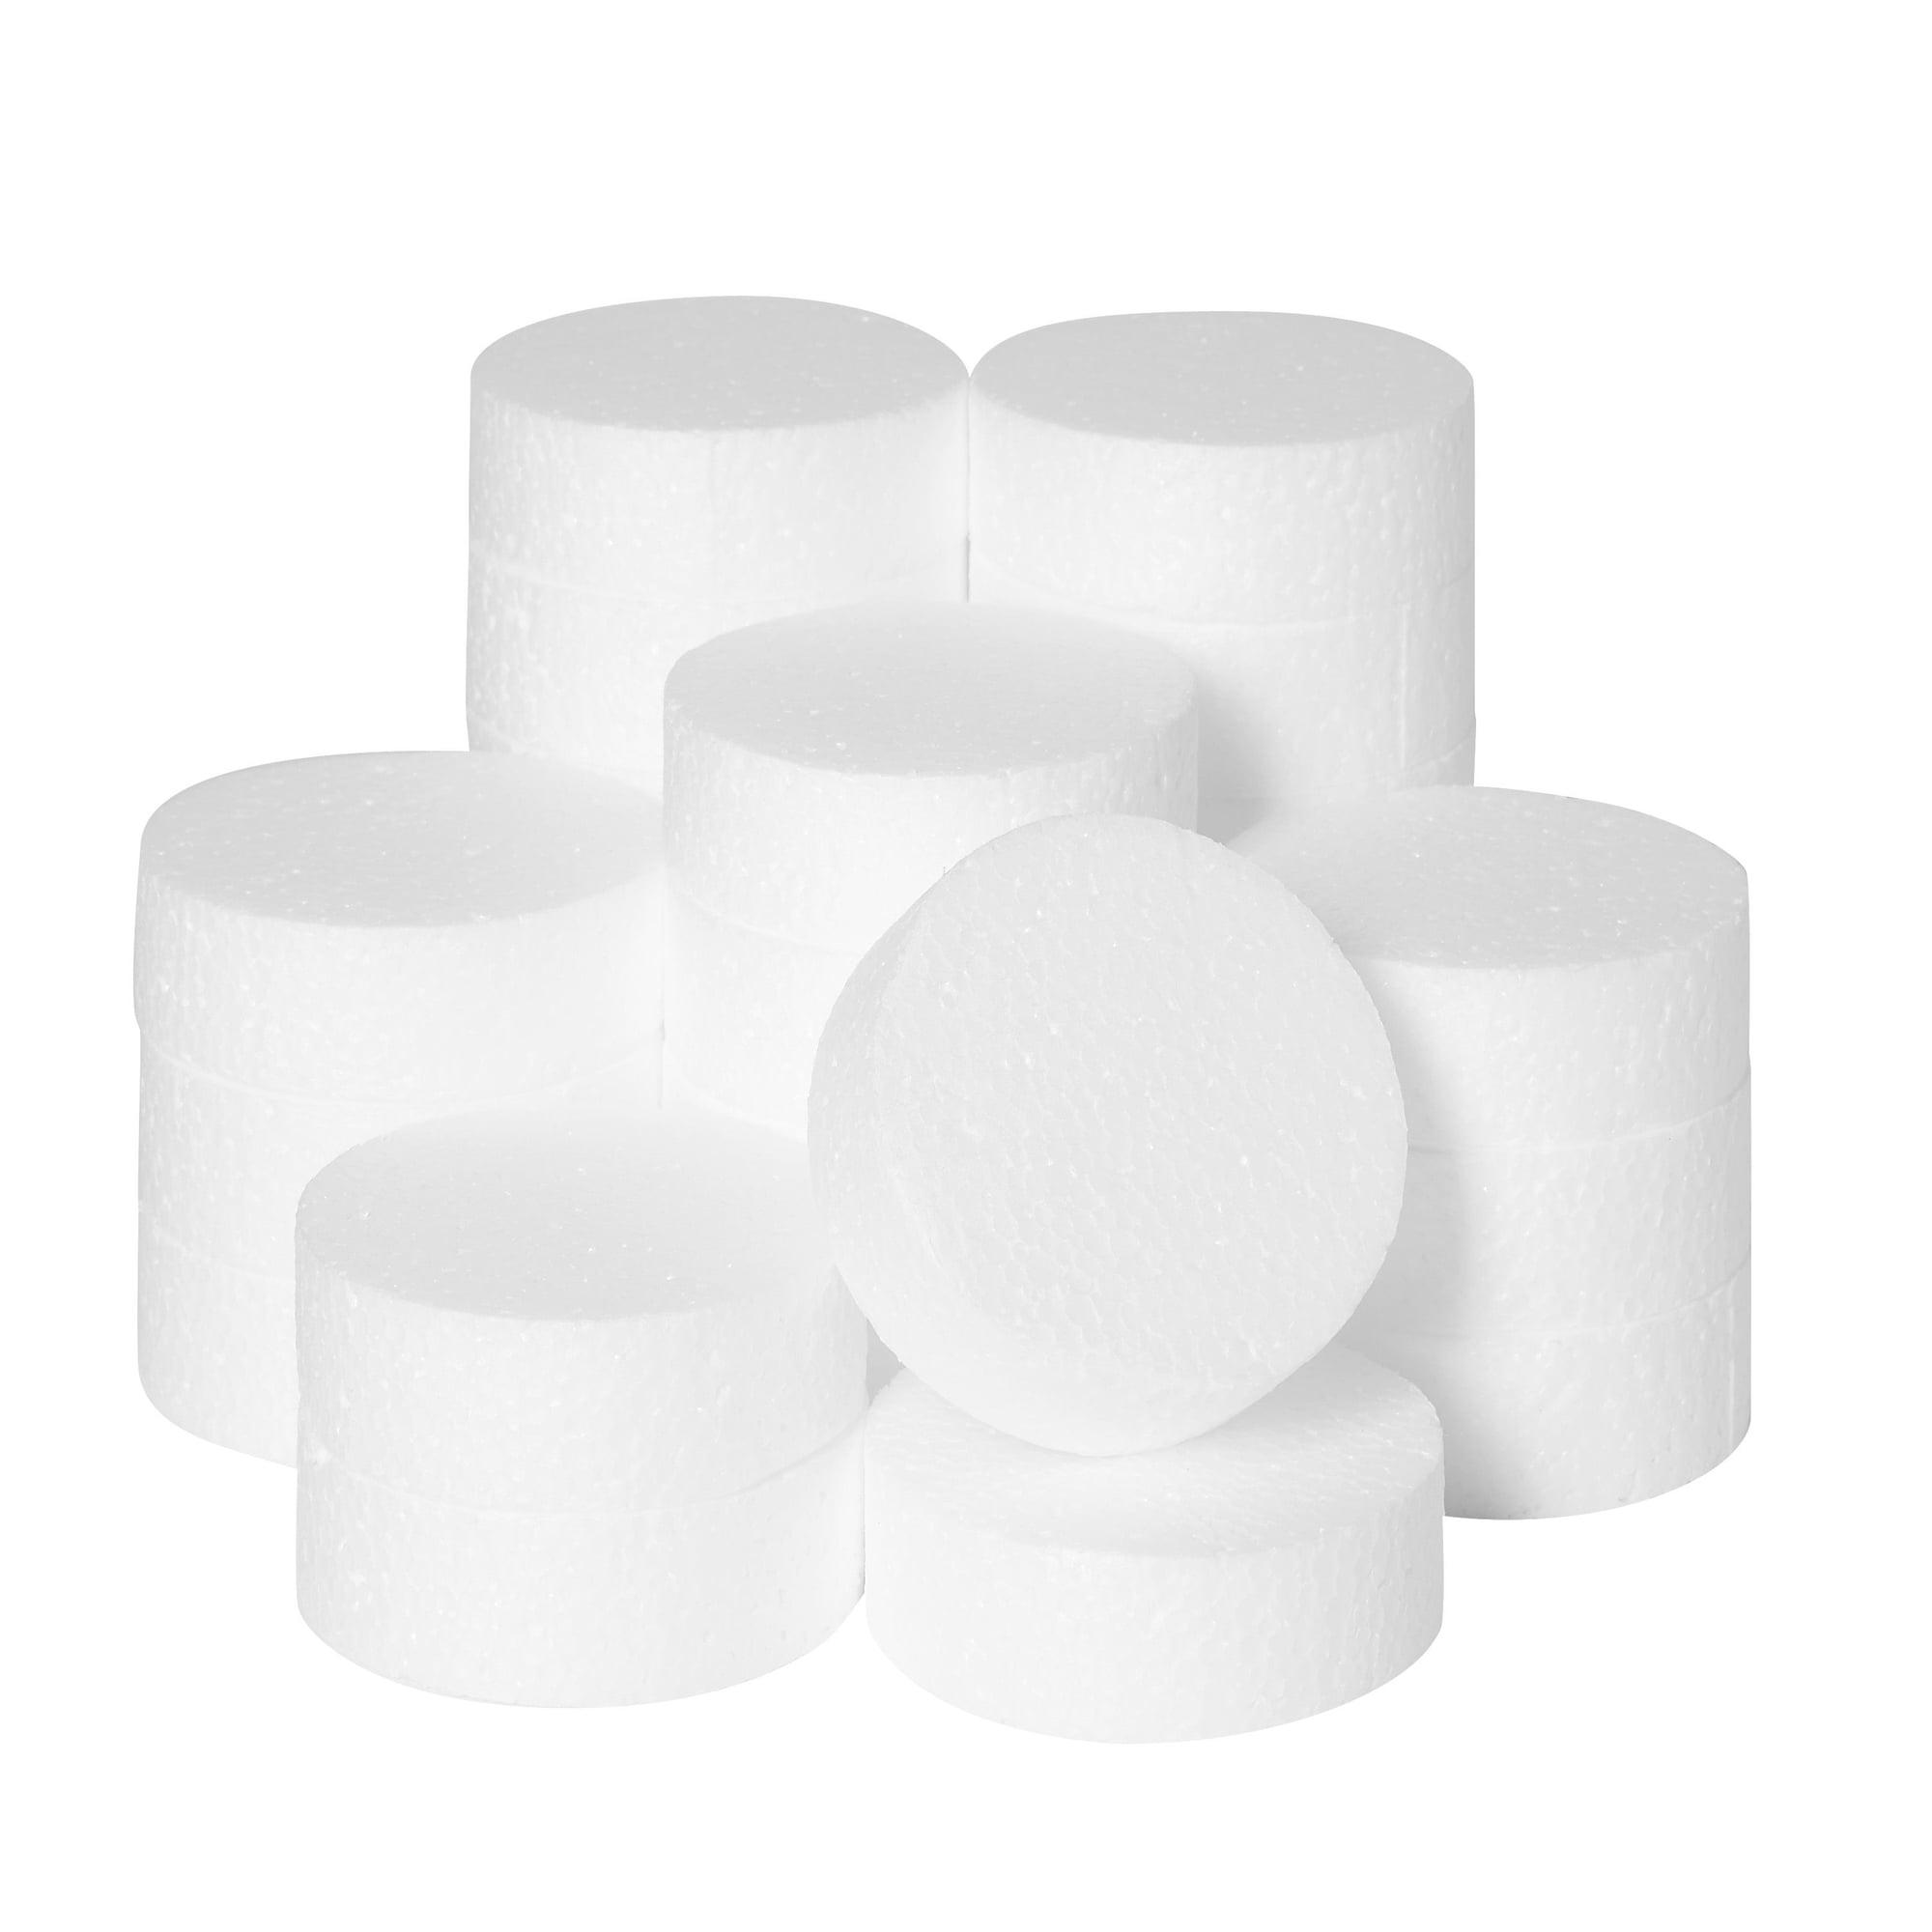 CYEAH 16 Pcs Round Foam Circles Discs 4 inch Foam Circles for Craft, Blank Craft Foam Circle Disc, Foam Blocks for Crafts (4 x 4 x 1 inch)